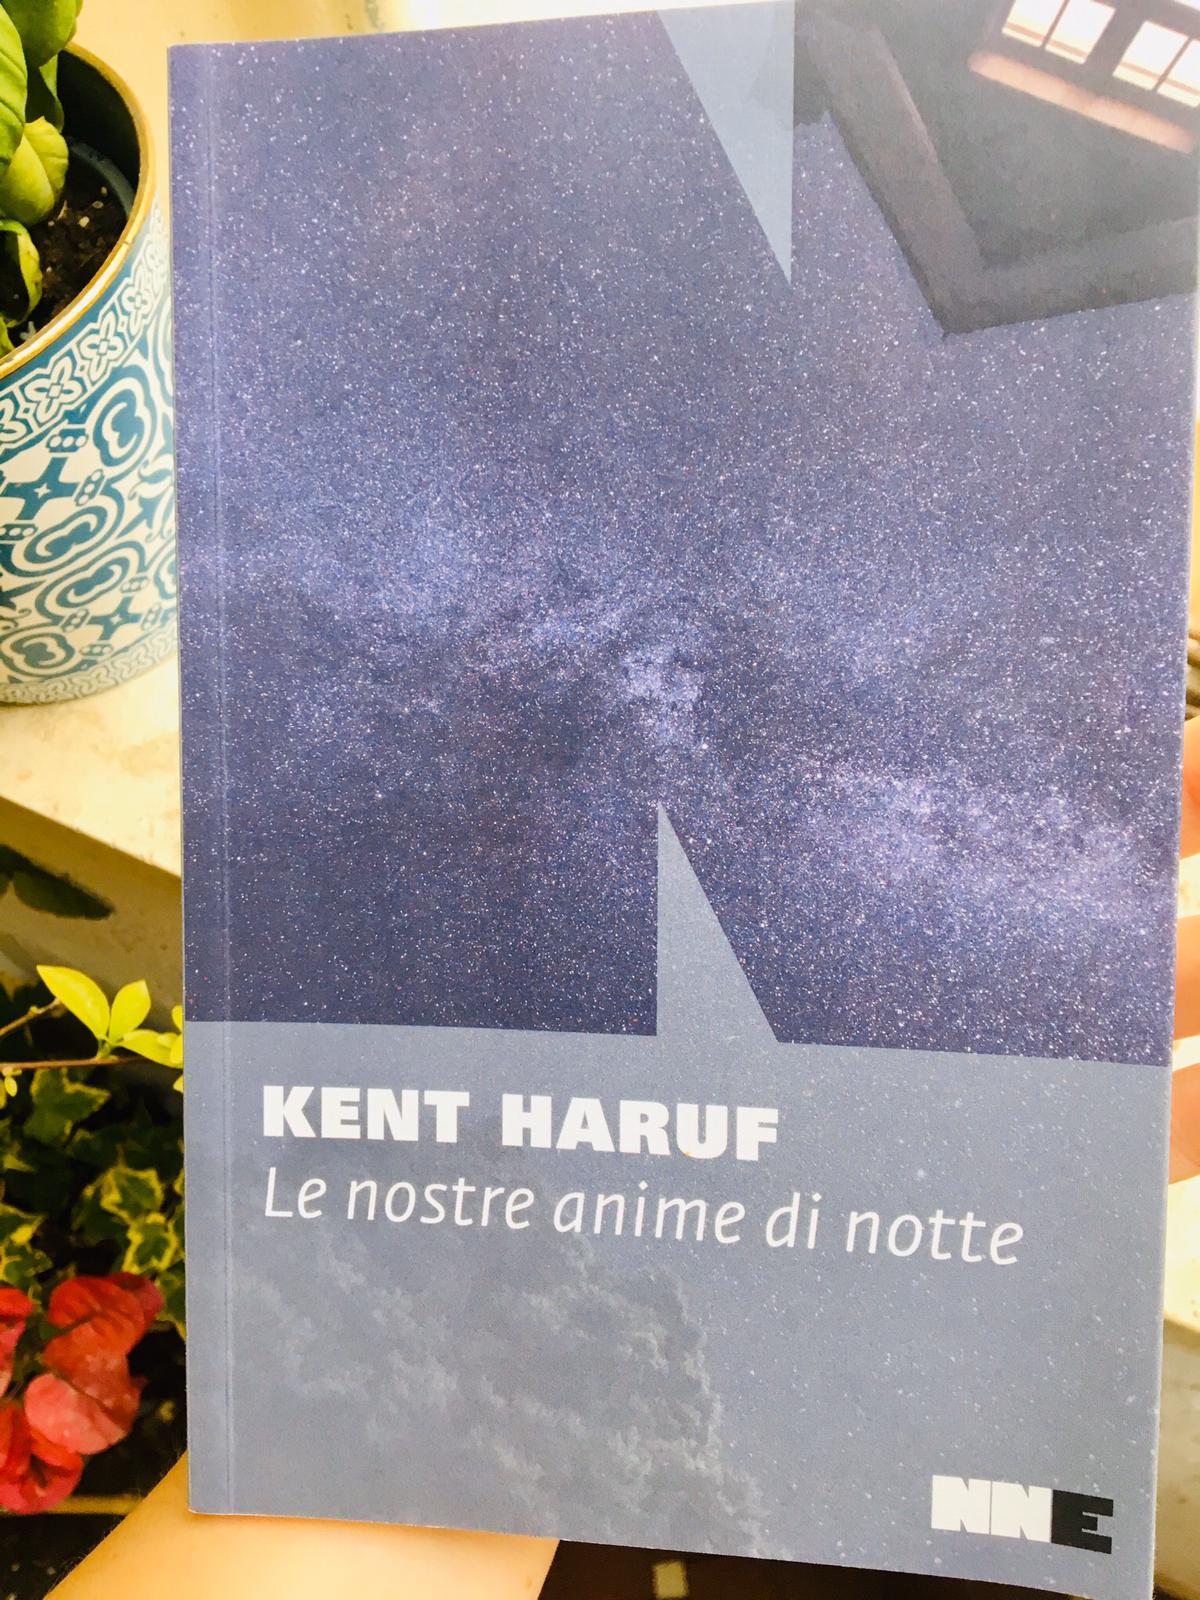 Le nostre anime di notte di Kent Haruf - Pomezianews